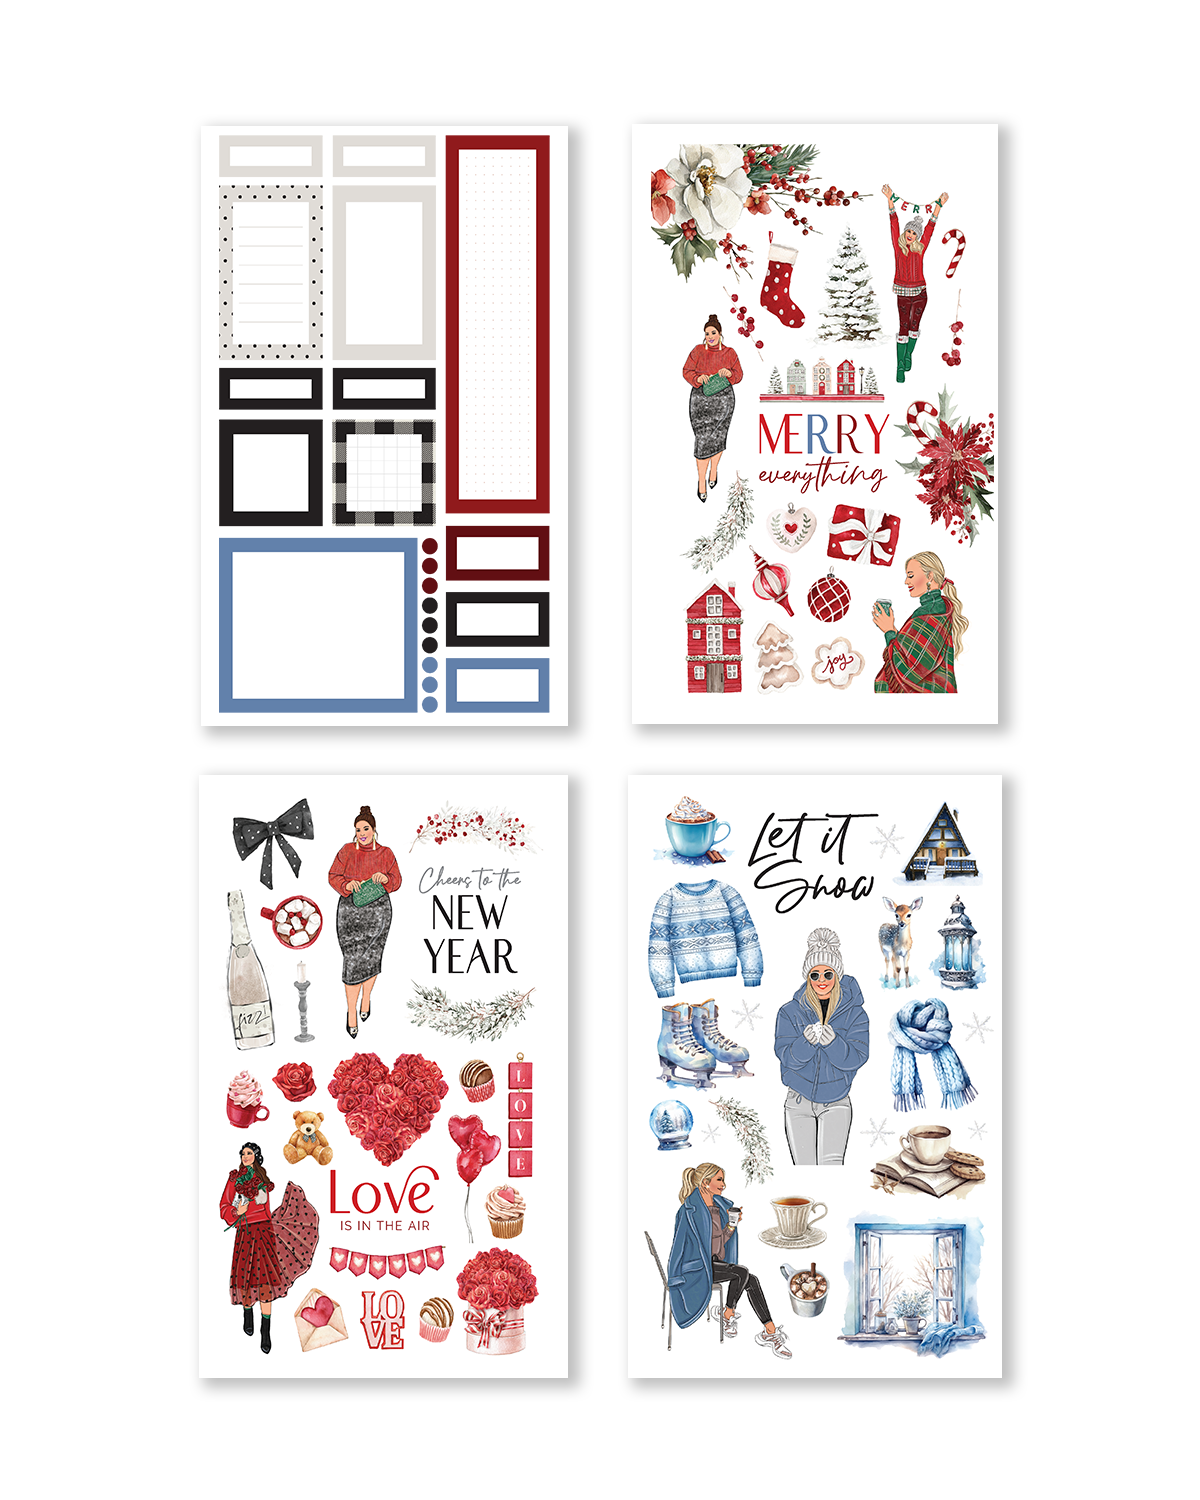 Shop Rongrong Whimsical Seasonal Sticker Book